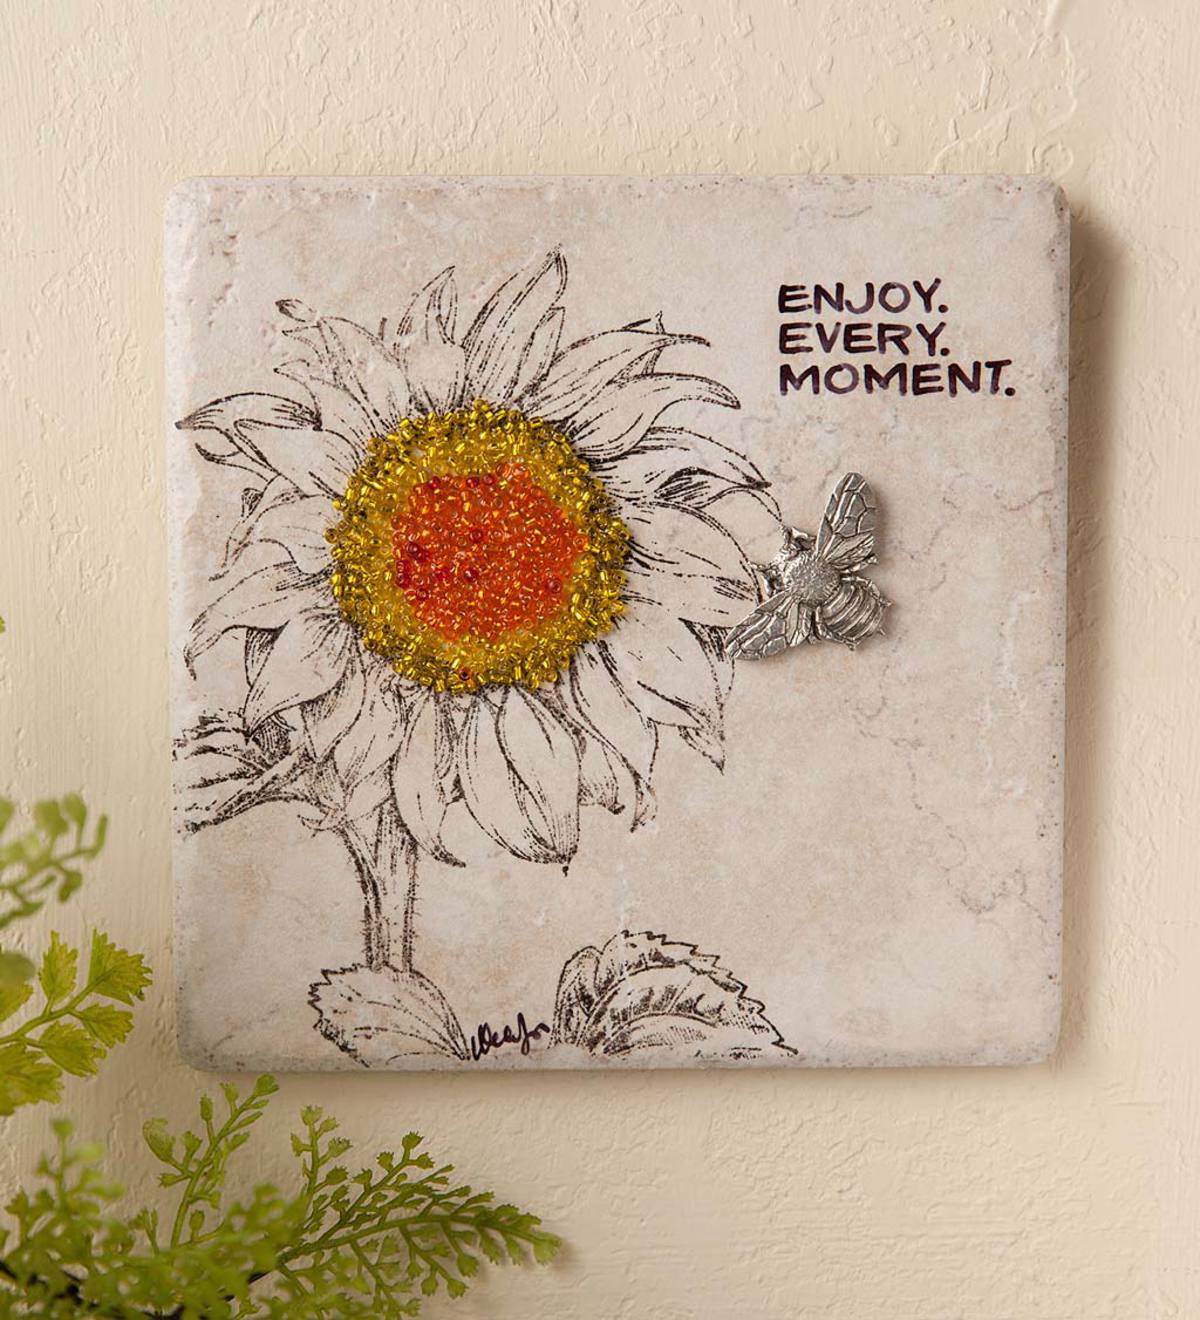 Enjoy Every Moment Ceramic Tile Plaque